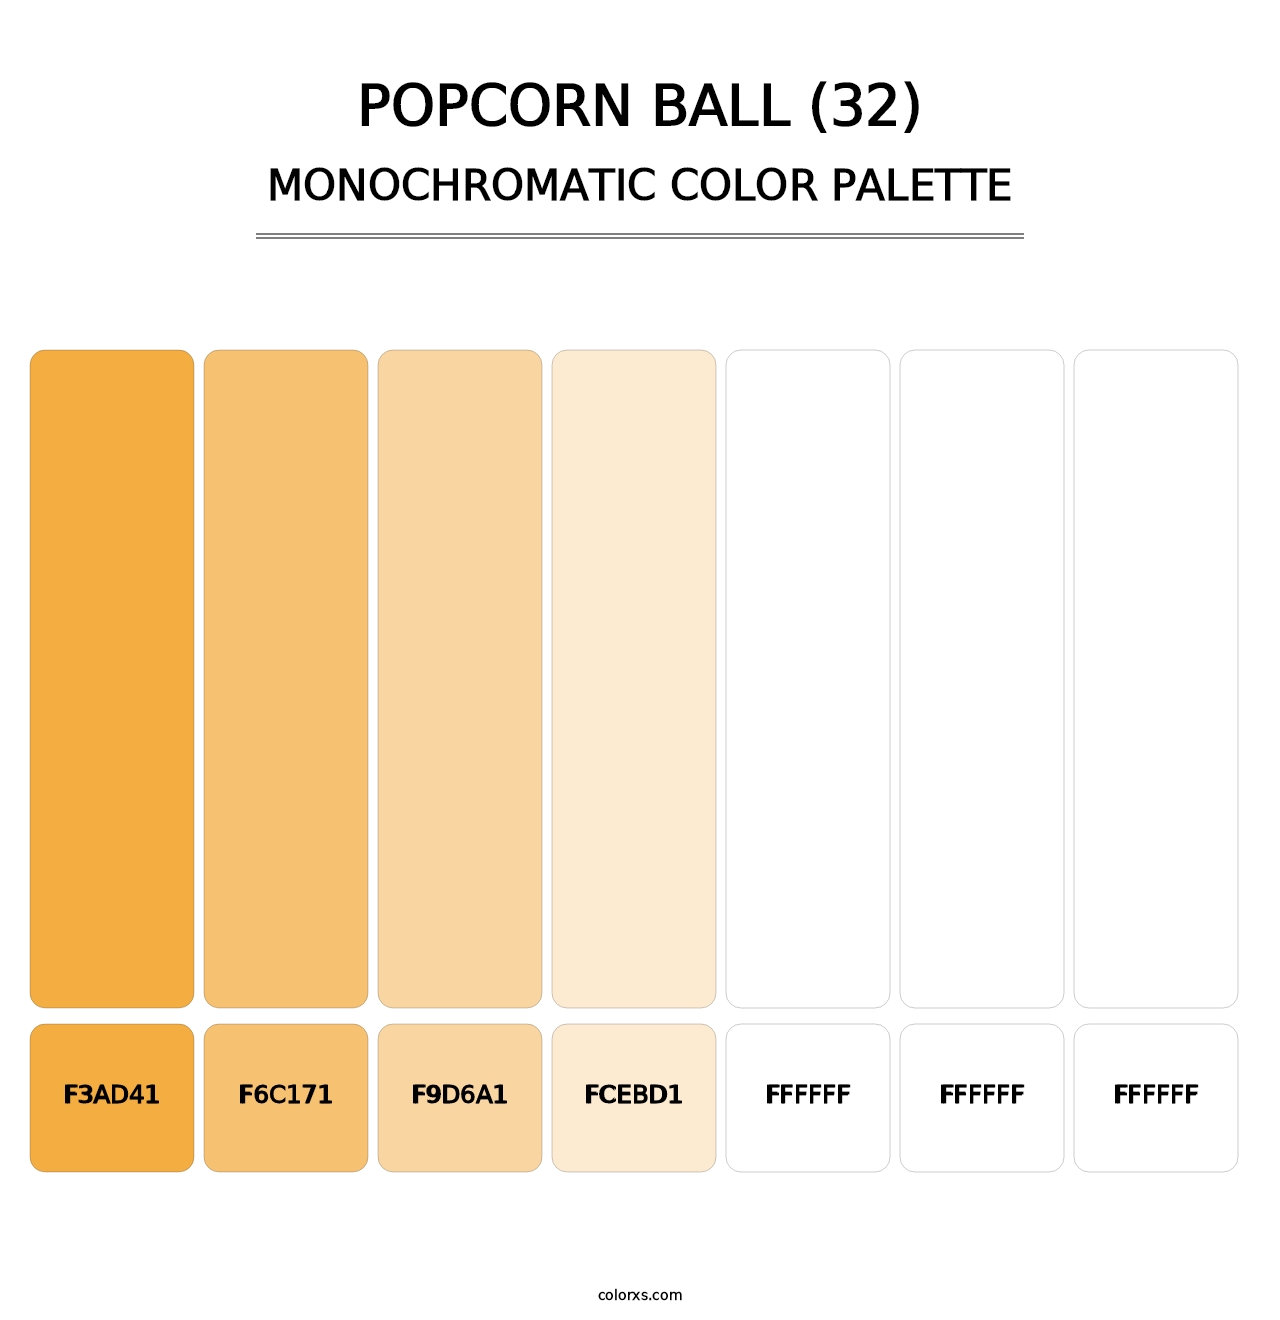 Popcorn Ball (32) - Monochromatic Color Palette